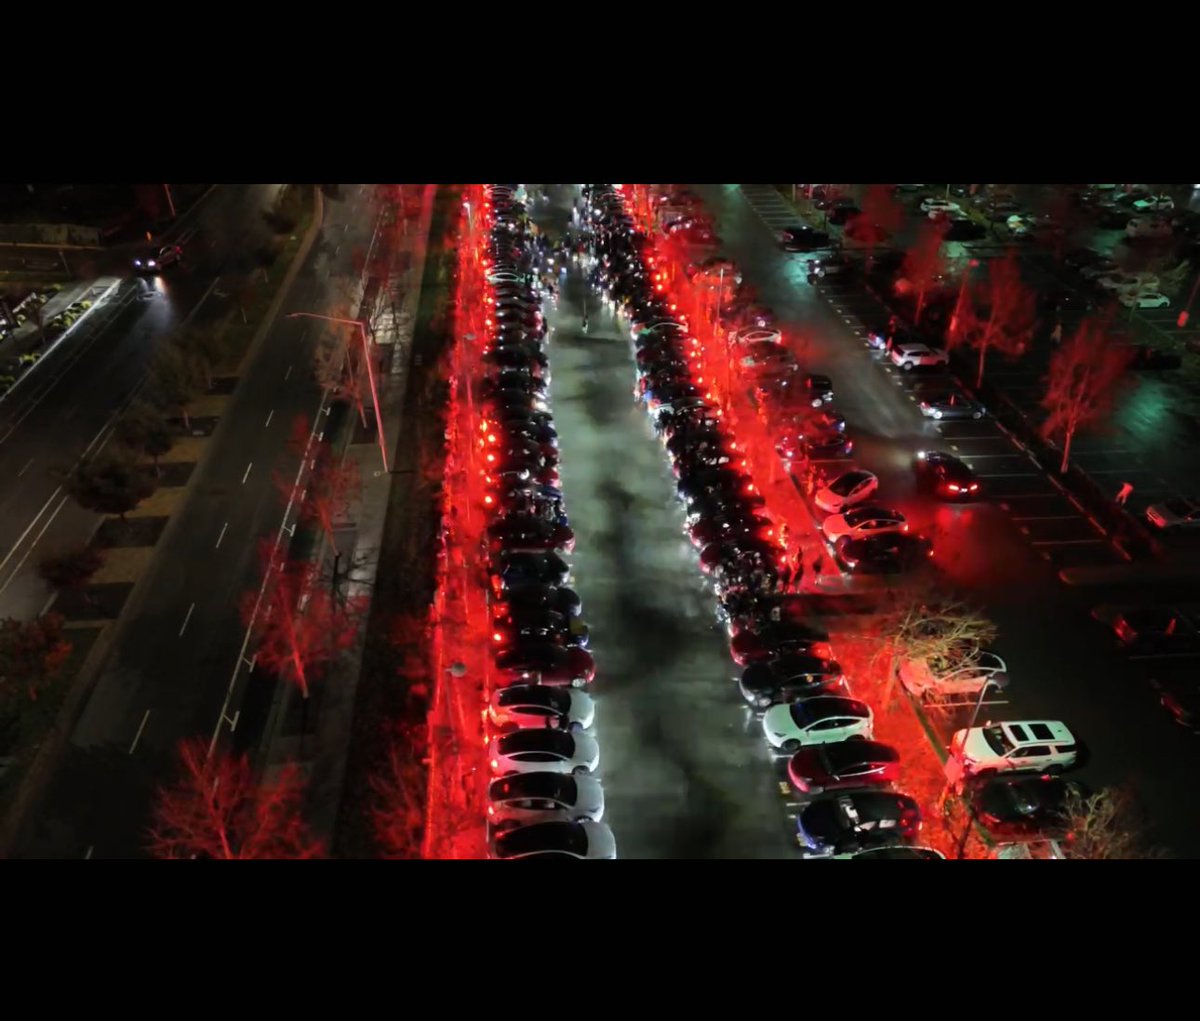 Spectacular car rally, Tesla light show dedicated to Lord Ram enthrals Bay Area residents in California. My @PTI_News Report 👇
m.economictimes.com/news/internati… @AchaleshAmar  @CGISFO @cgihou @RamJanmBhoomi #ramcarrally